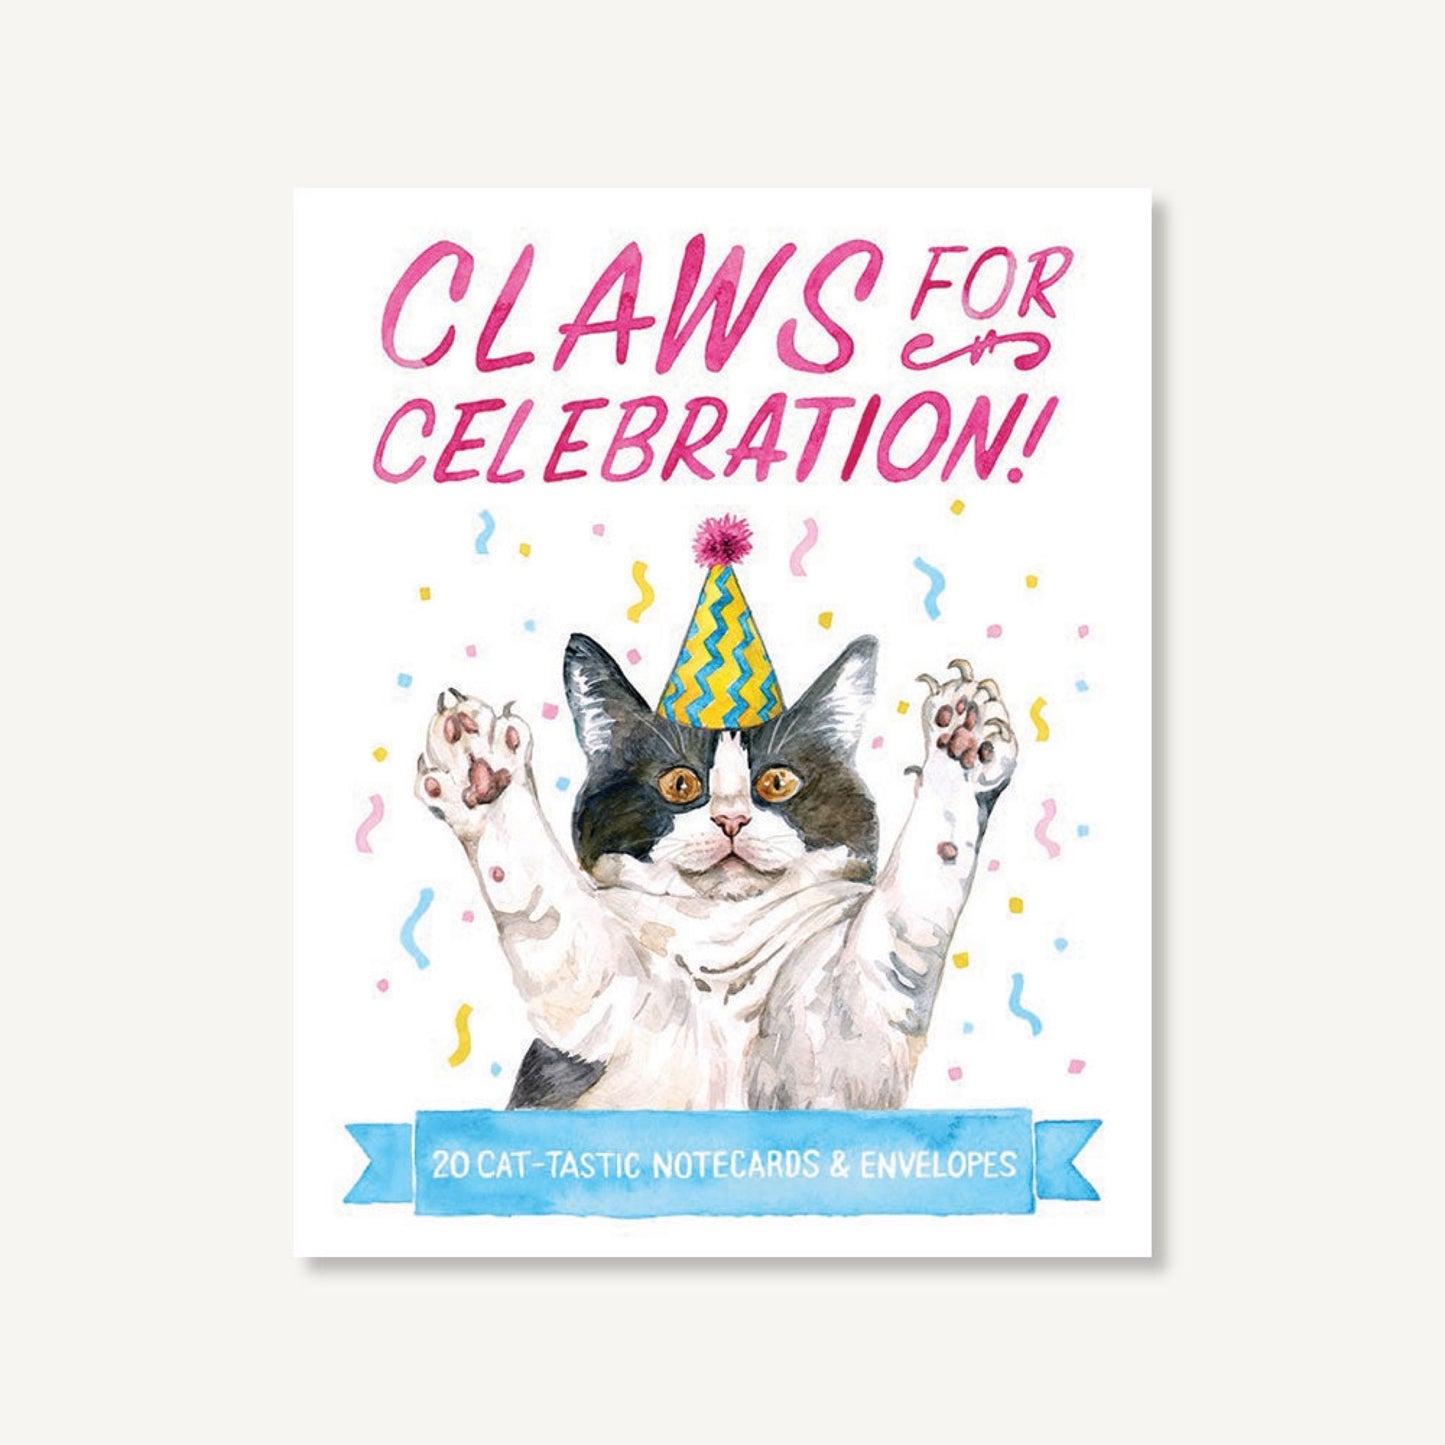 Claws for Celebration! 20 Cat-Tastic Notecards & Envelopes